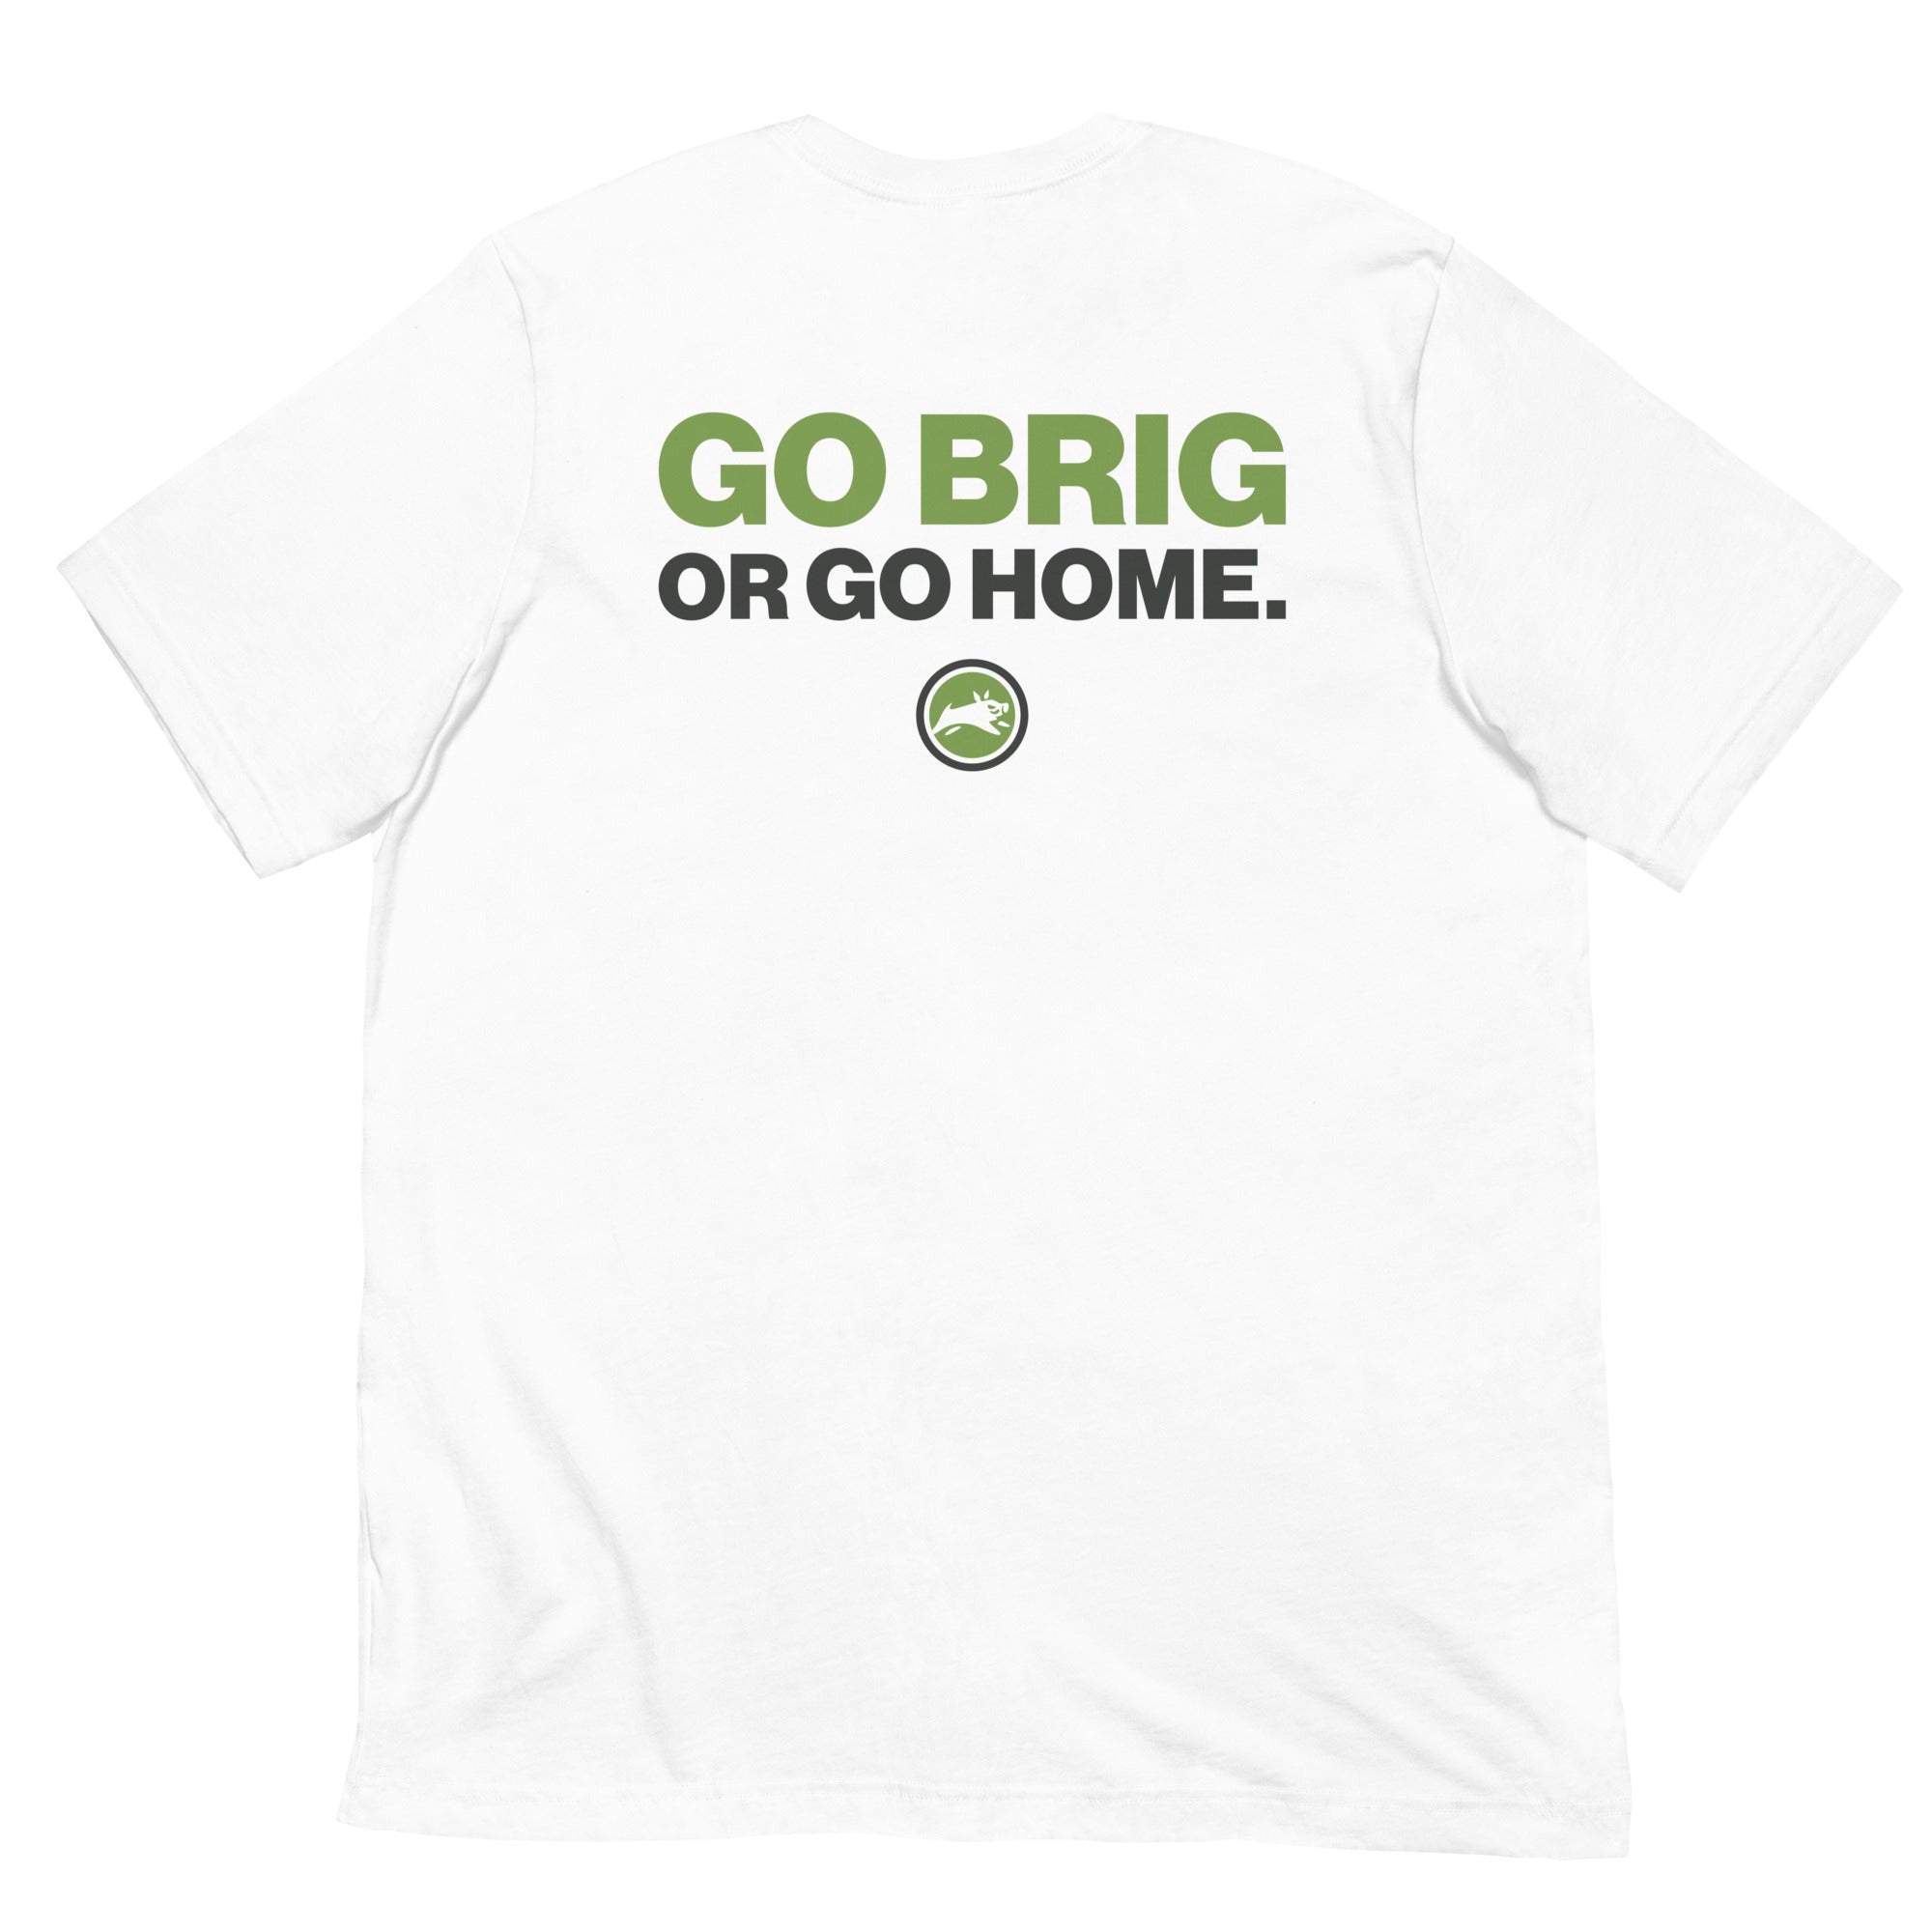 Go Brig or Go Home. - Short-Sleeve Unisex T-Shirt